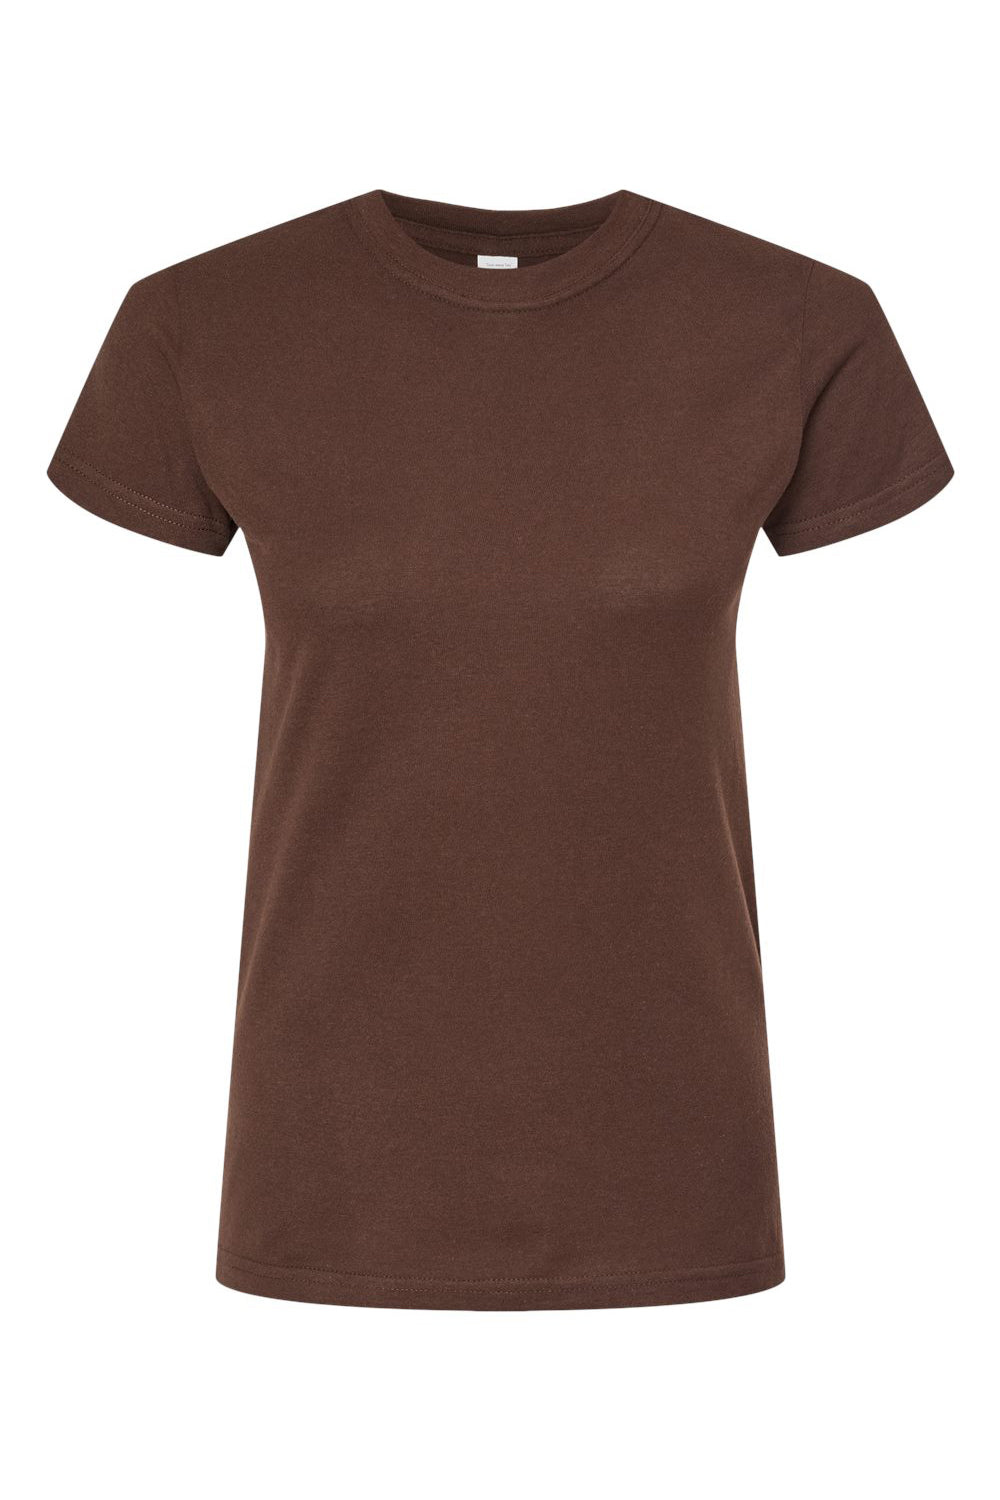 Tultex 213 Womens Fine Jersey Slim Fit Short Sleeve Crewneck T-Shirt Brown Flat Front